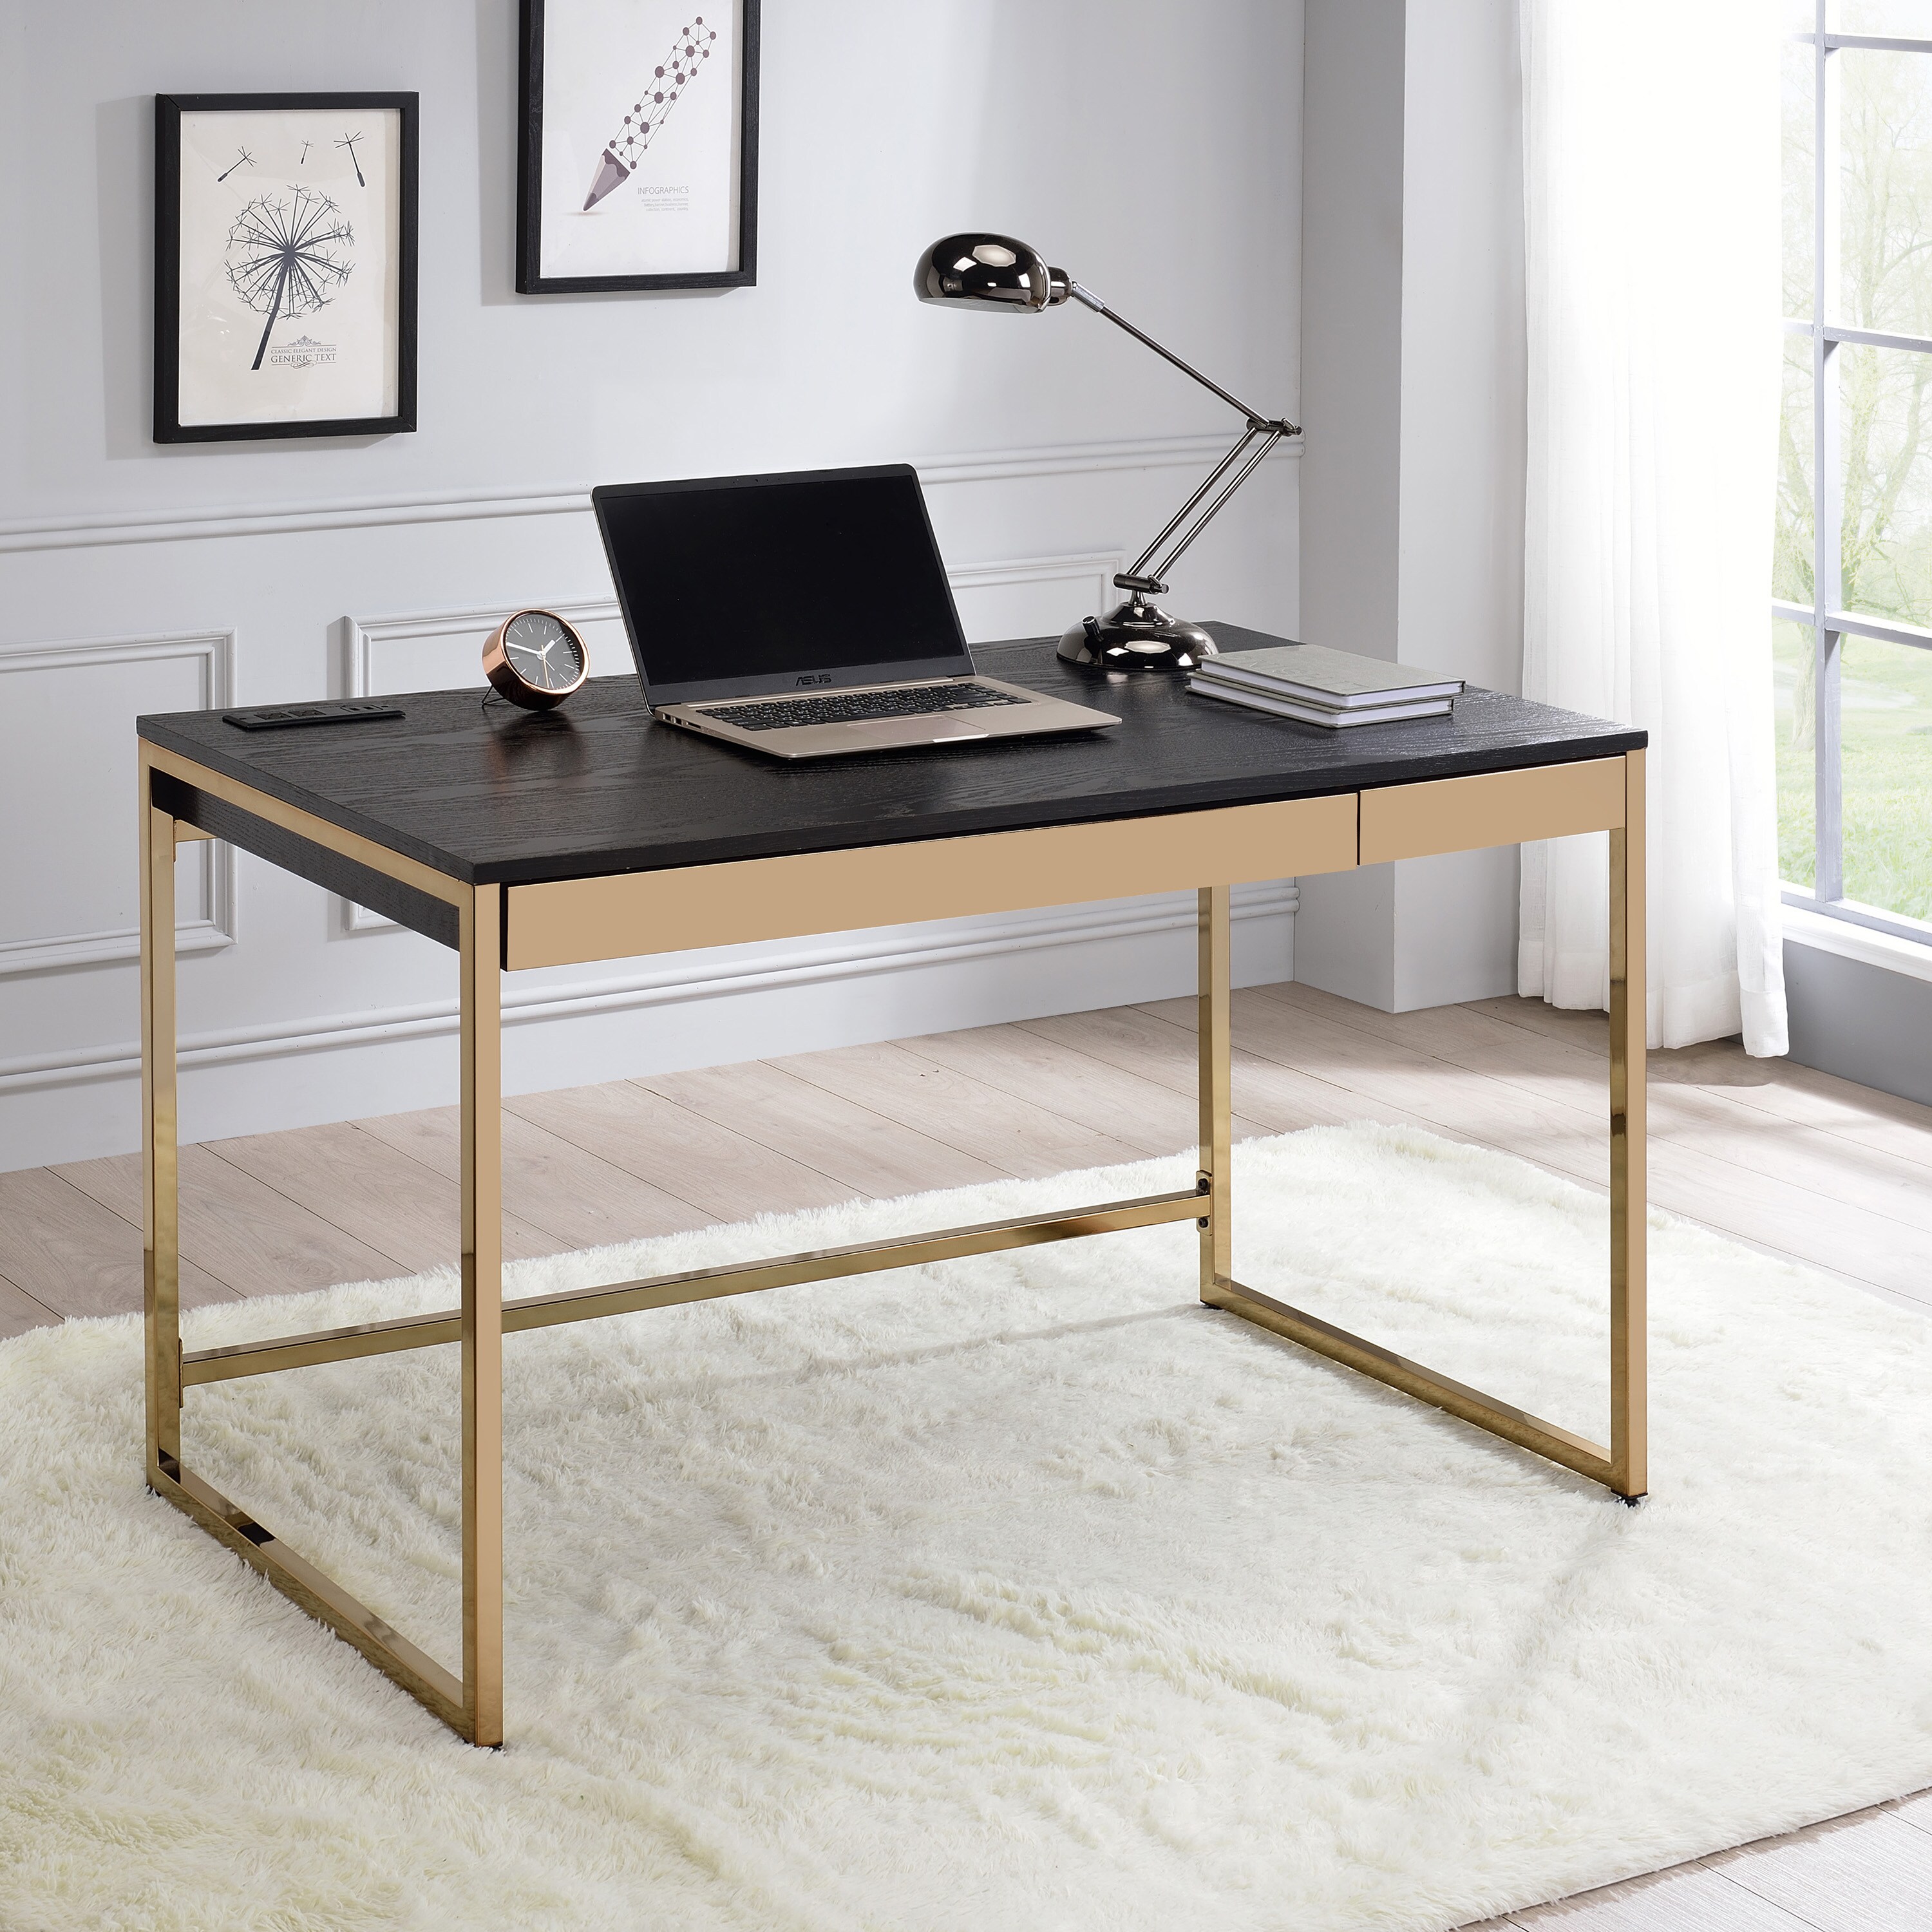 Furniture of America Derwin 47.2 in. Rectangular Dark Brown Wood Standing Desk with Adjustable Height, Dark Brown and Black